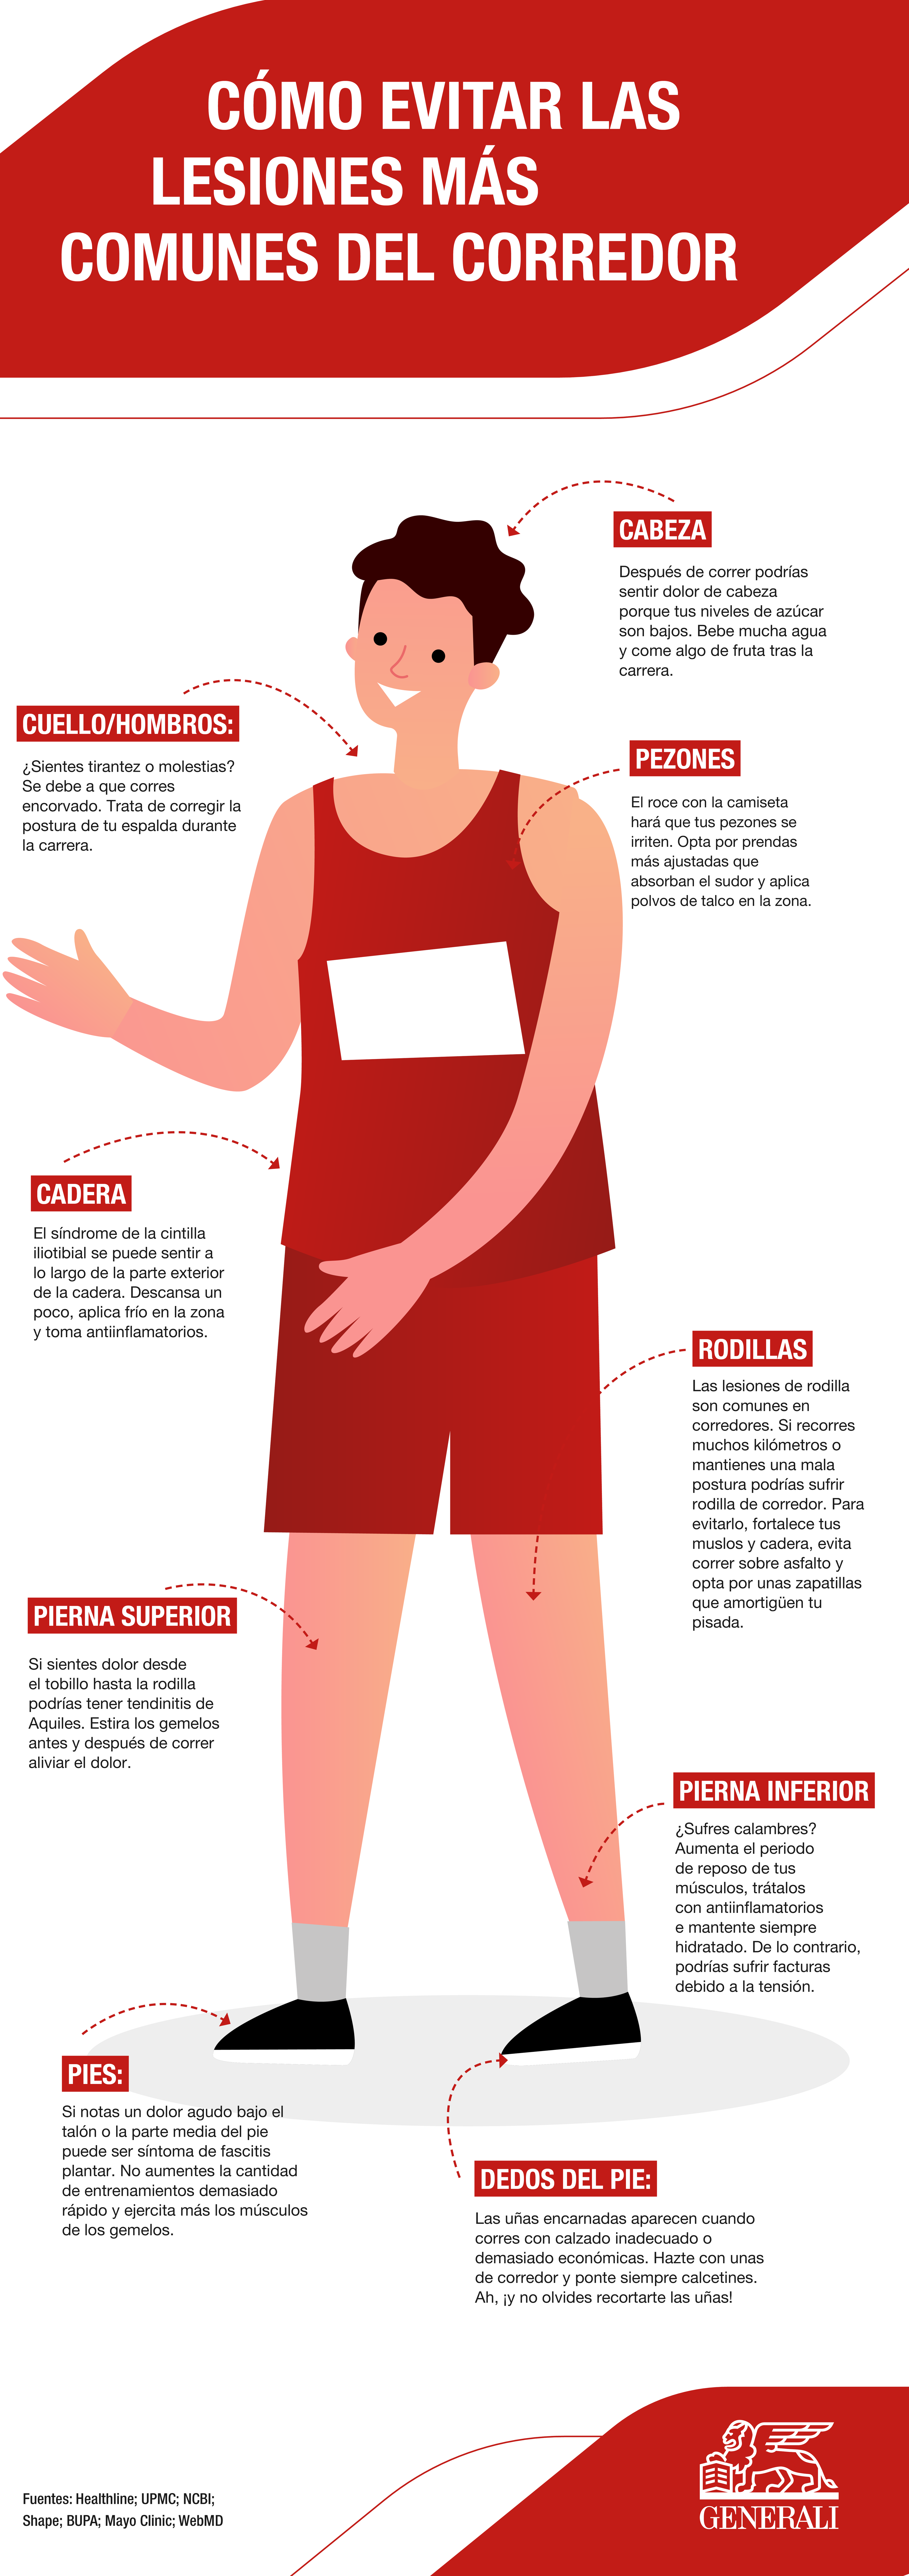 Generali_Running Injuries_Infographic_Spanish_shorter.png